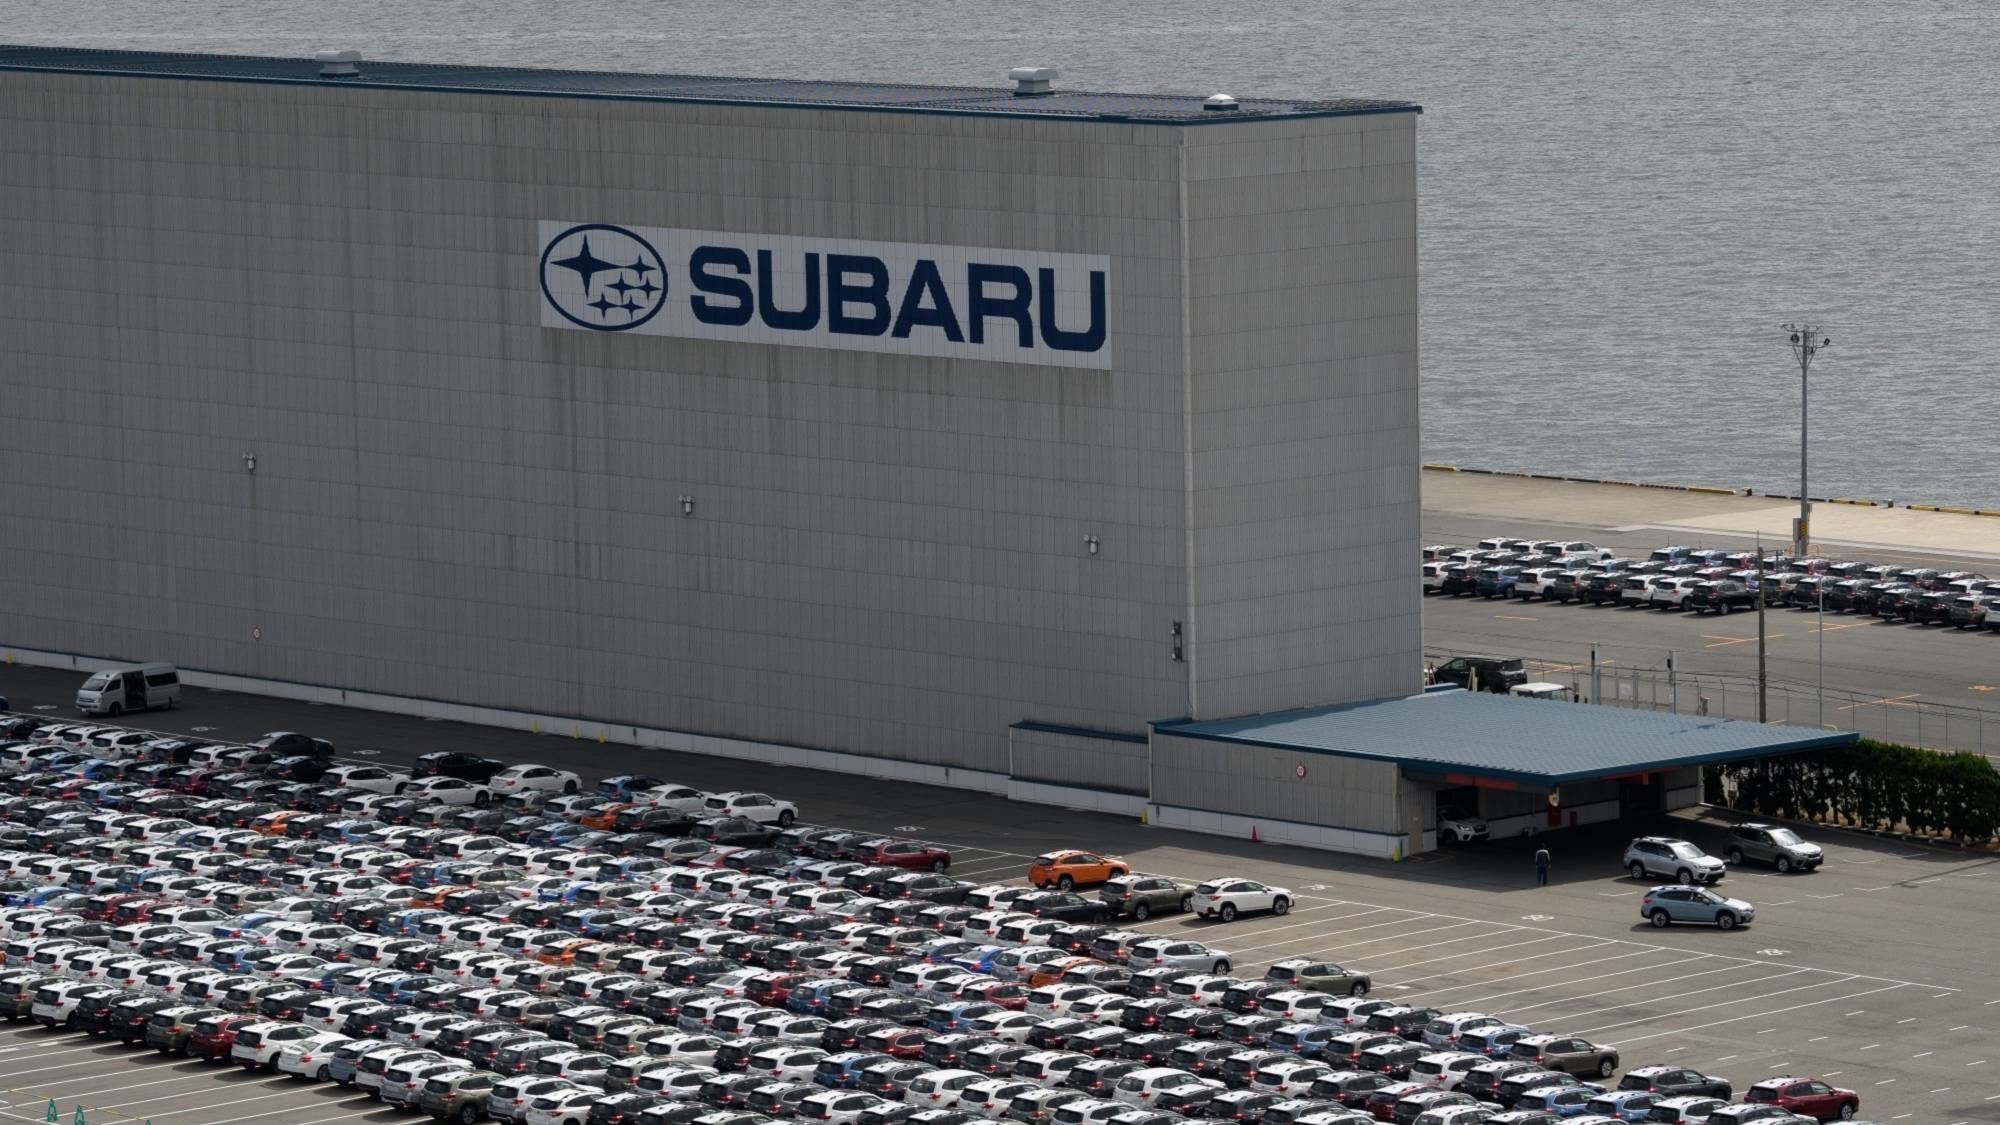 Subaru Makes the Safest Cars in Japan